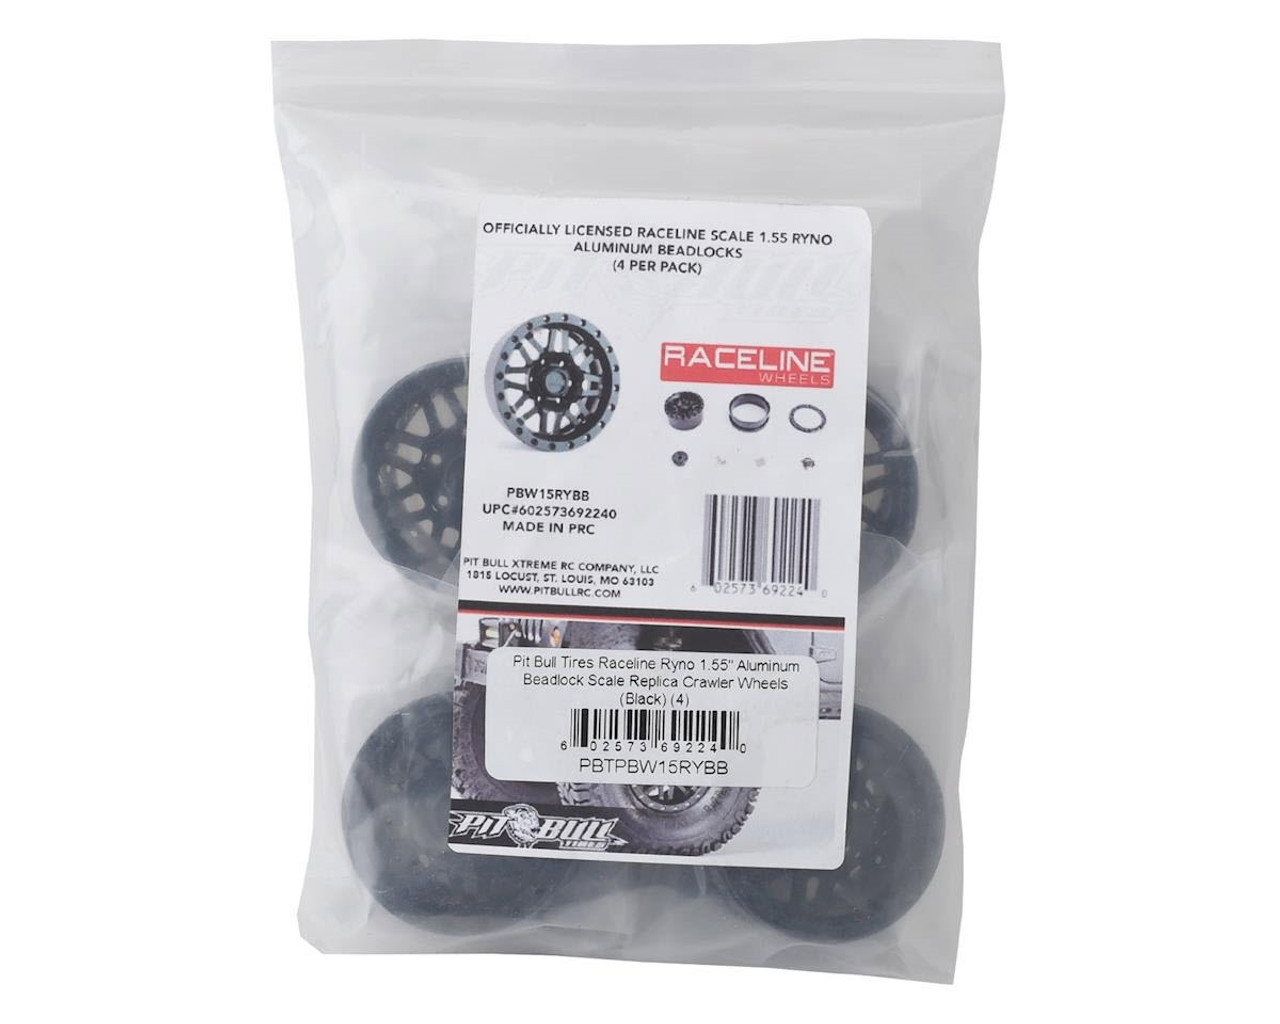 Pit Bull Tires Raceline Ryno 1.55 Aluminum Beadlock Crawler Wheels (Black) (4) w/12mm Hex